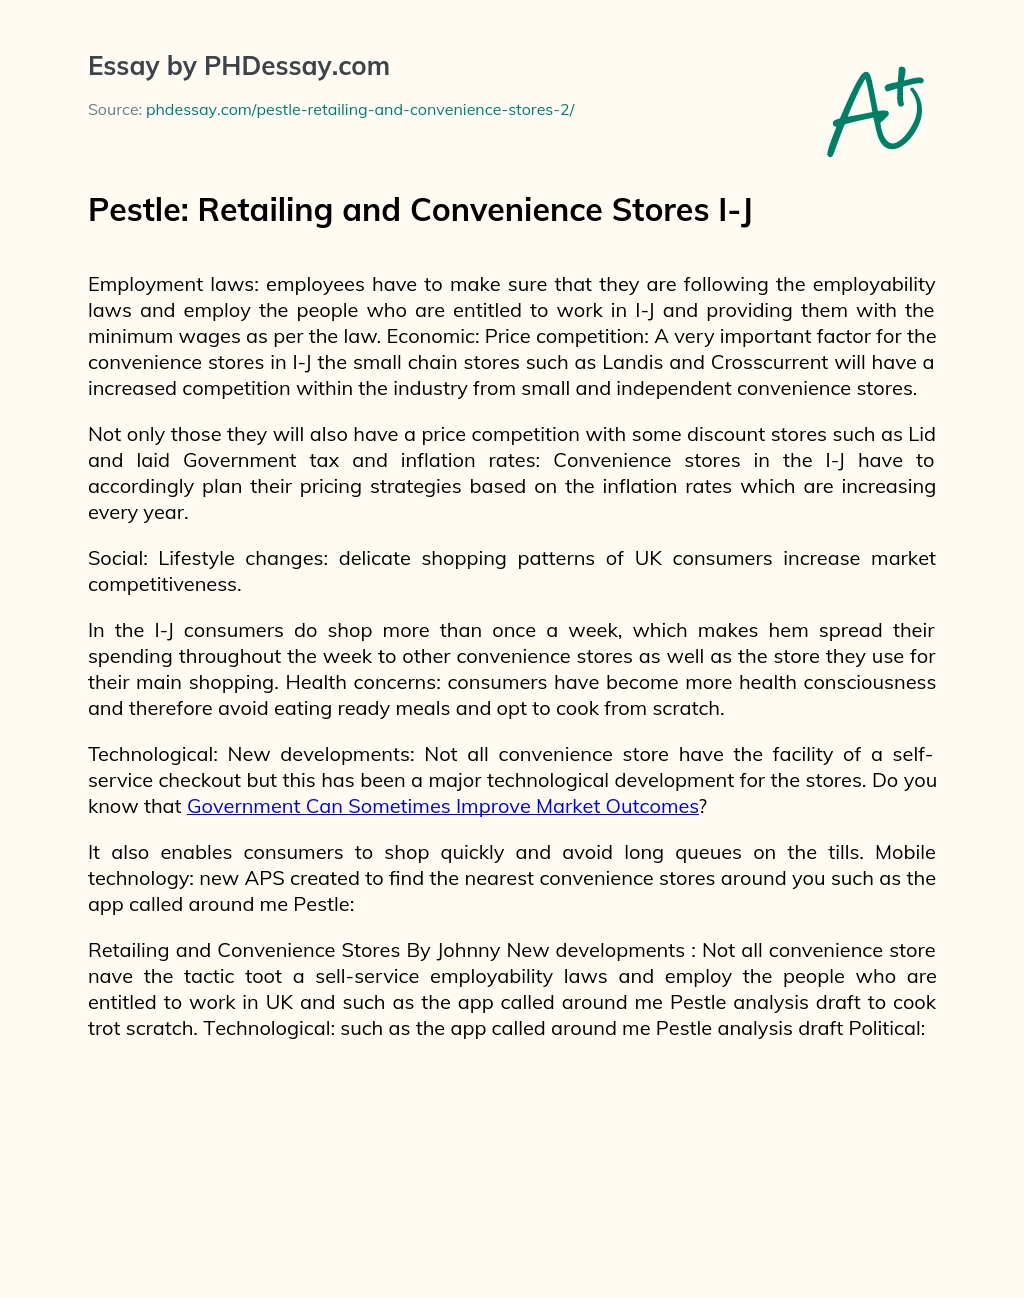 Pestle: Retailing and Convenience Stores I-J essay